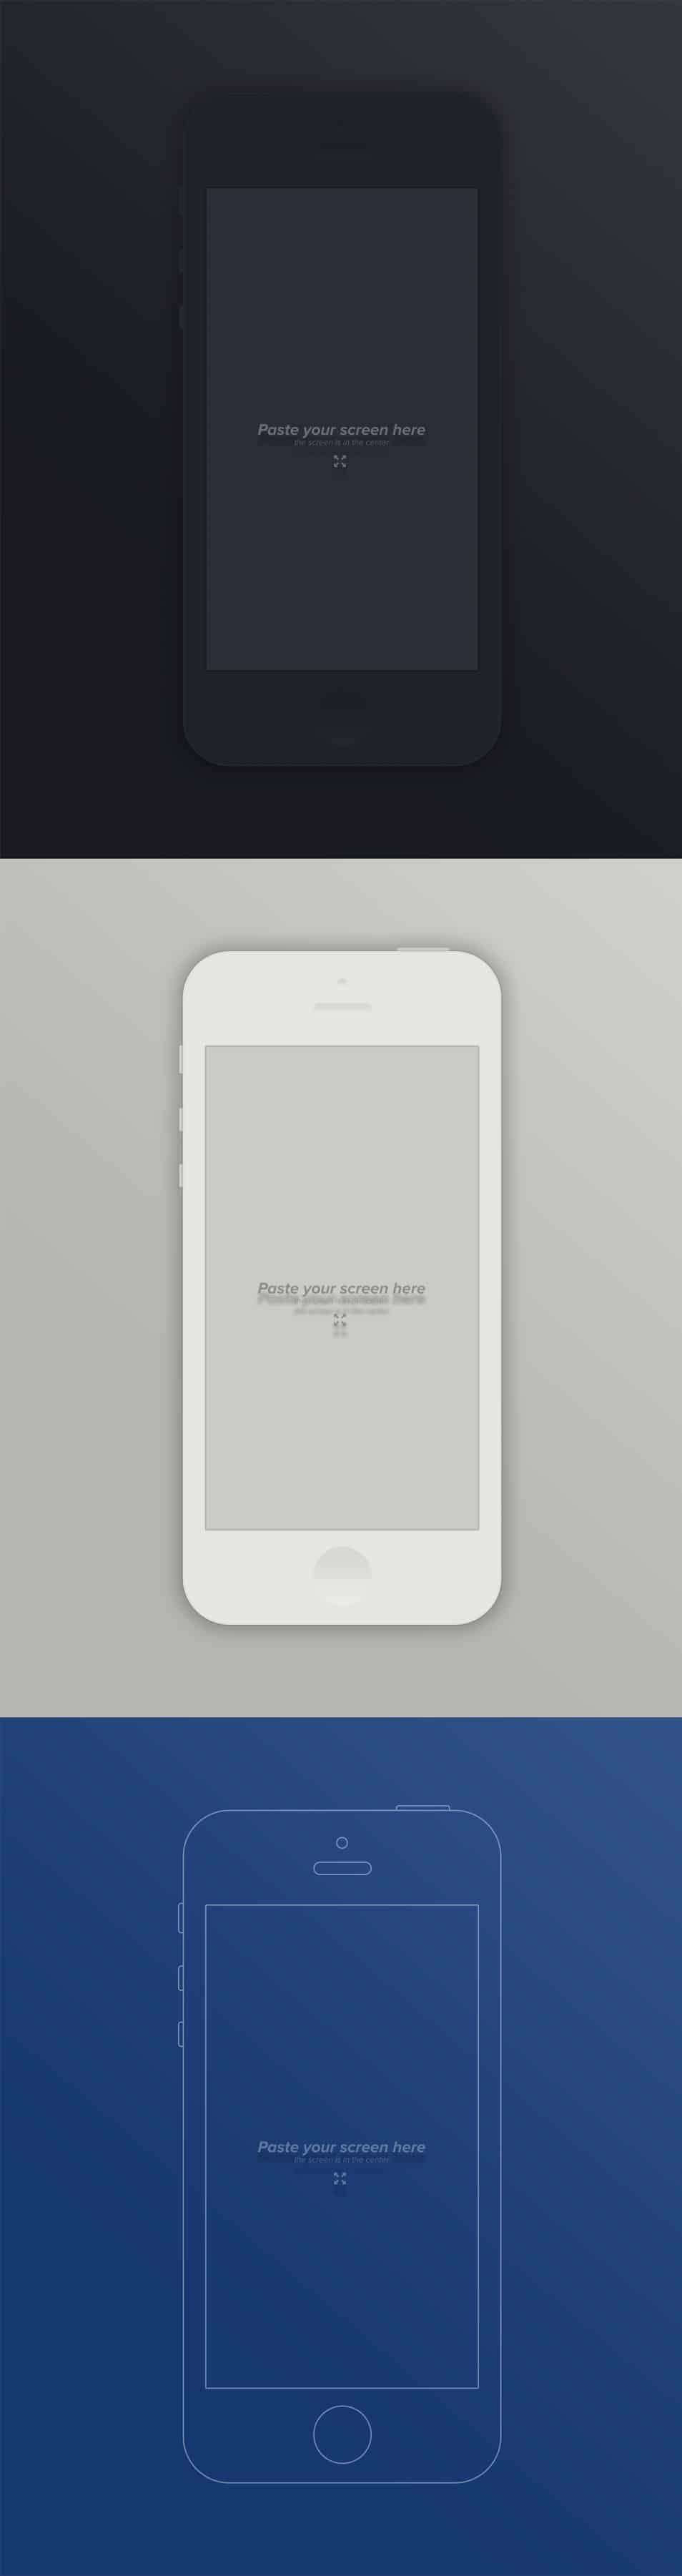 Minimal iPhone 4 iPhone 5 Mockup Templates